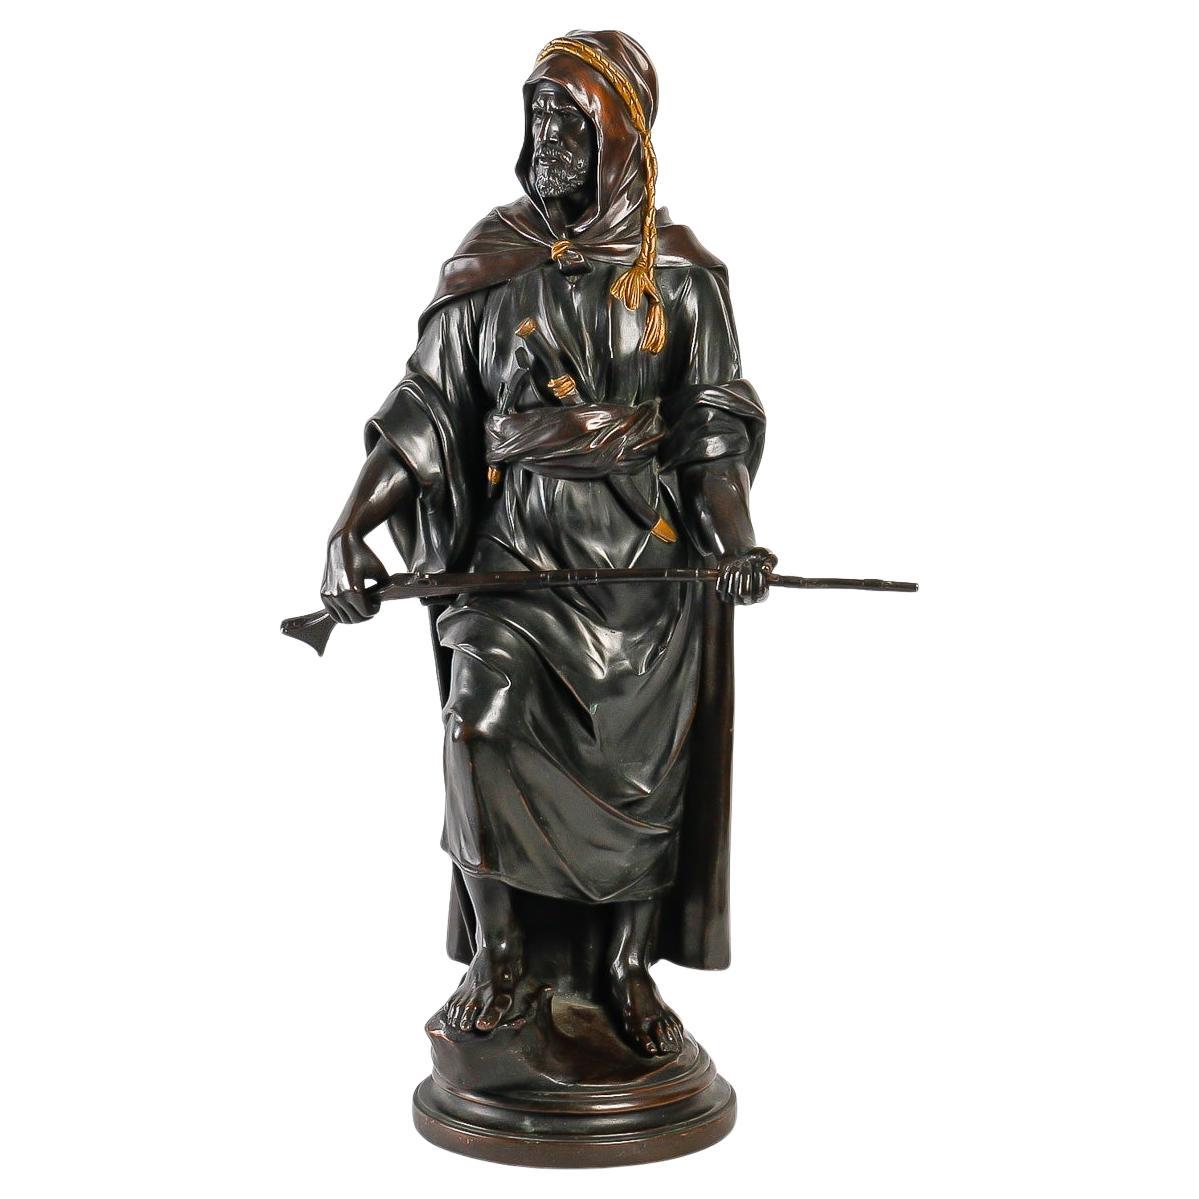 Bronze Sculpture by Franz Bergmann, "The Sultan", Orientalist Art. For Sale